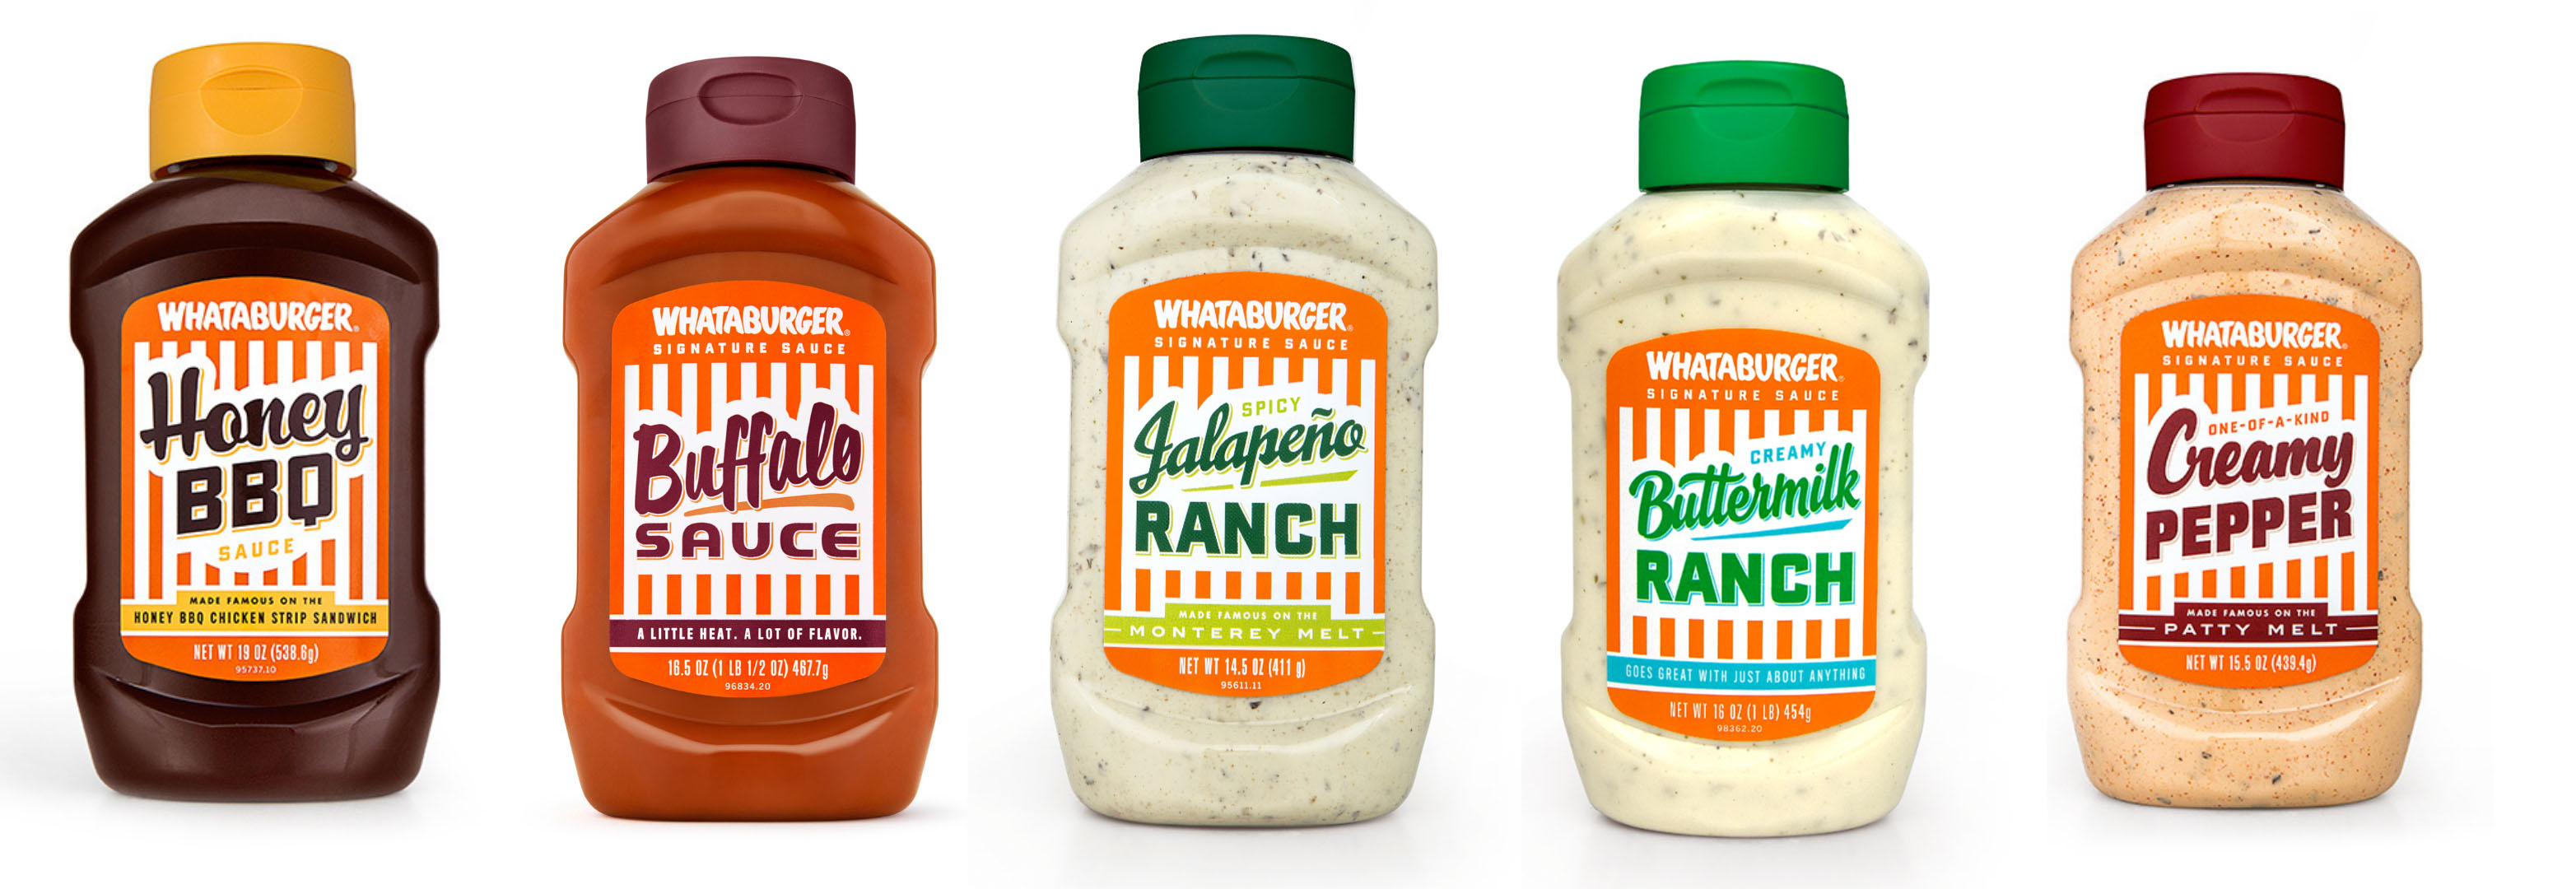 Whataburger Texas Size Spicy Ketchup